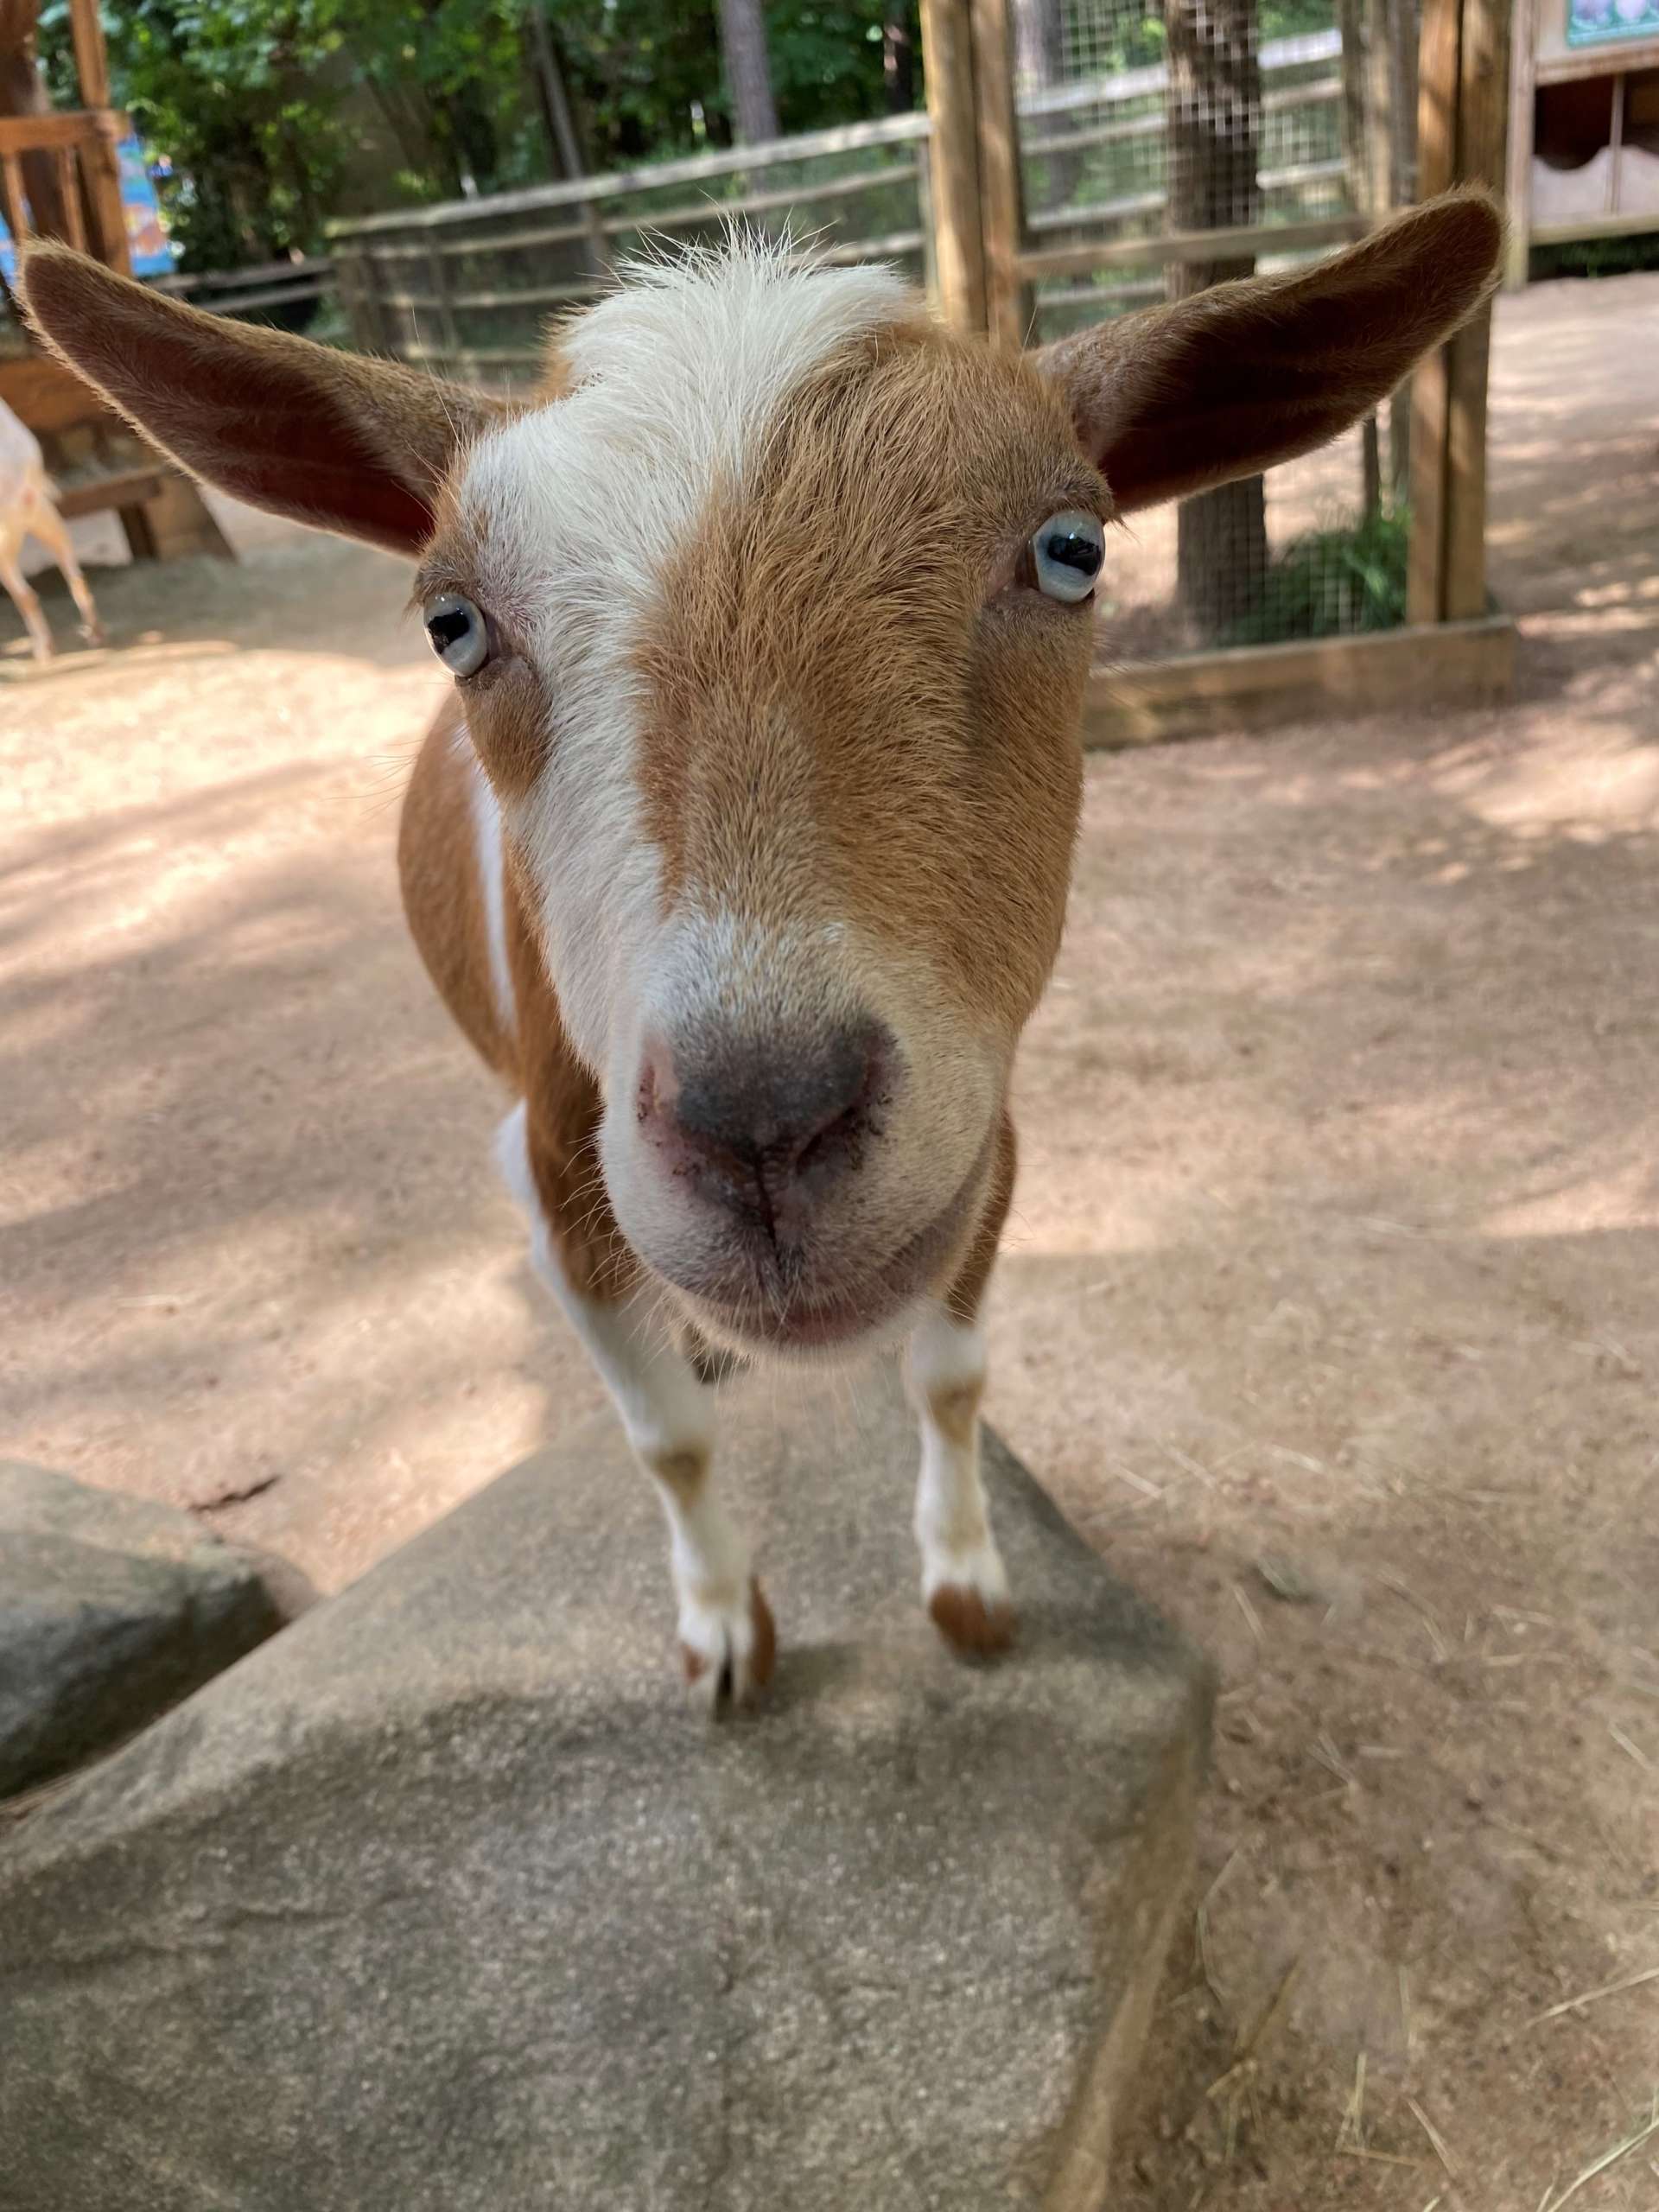 Goat myths and facts! - Zoo Atlanta